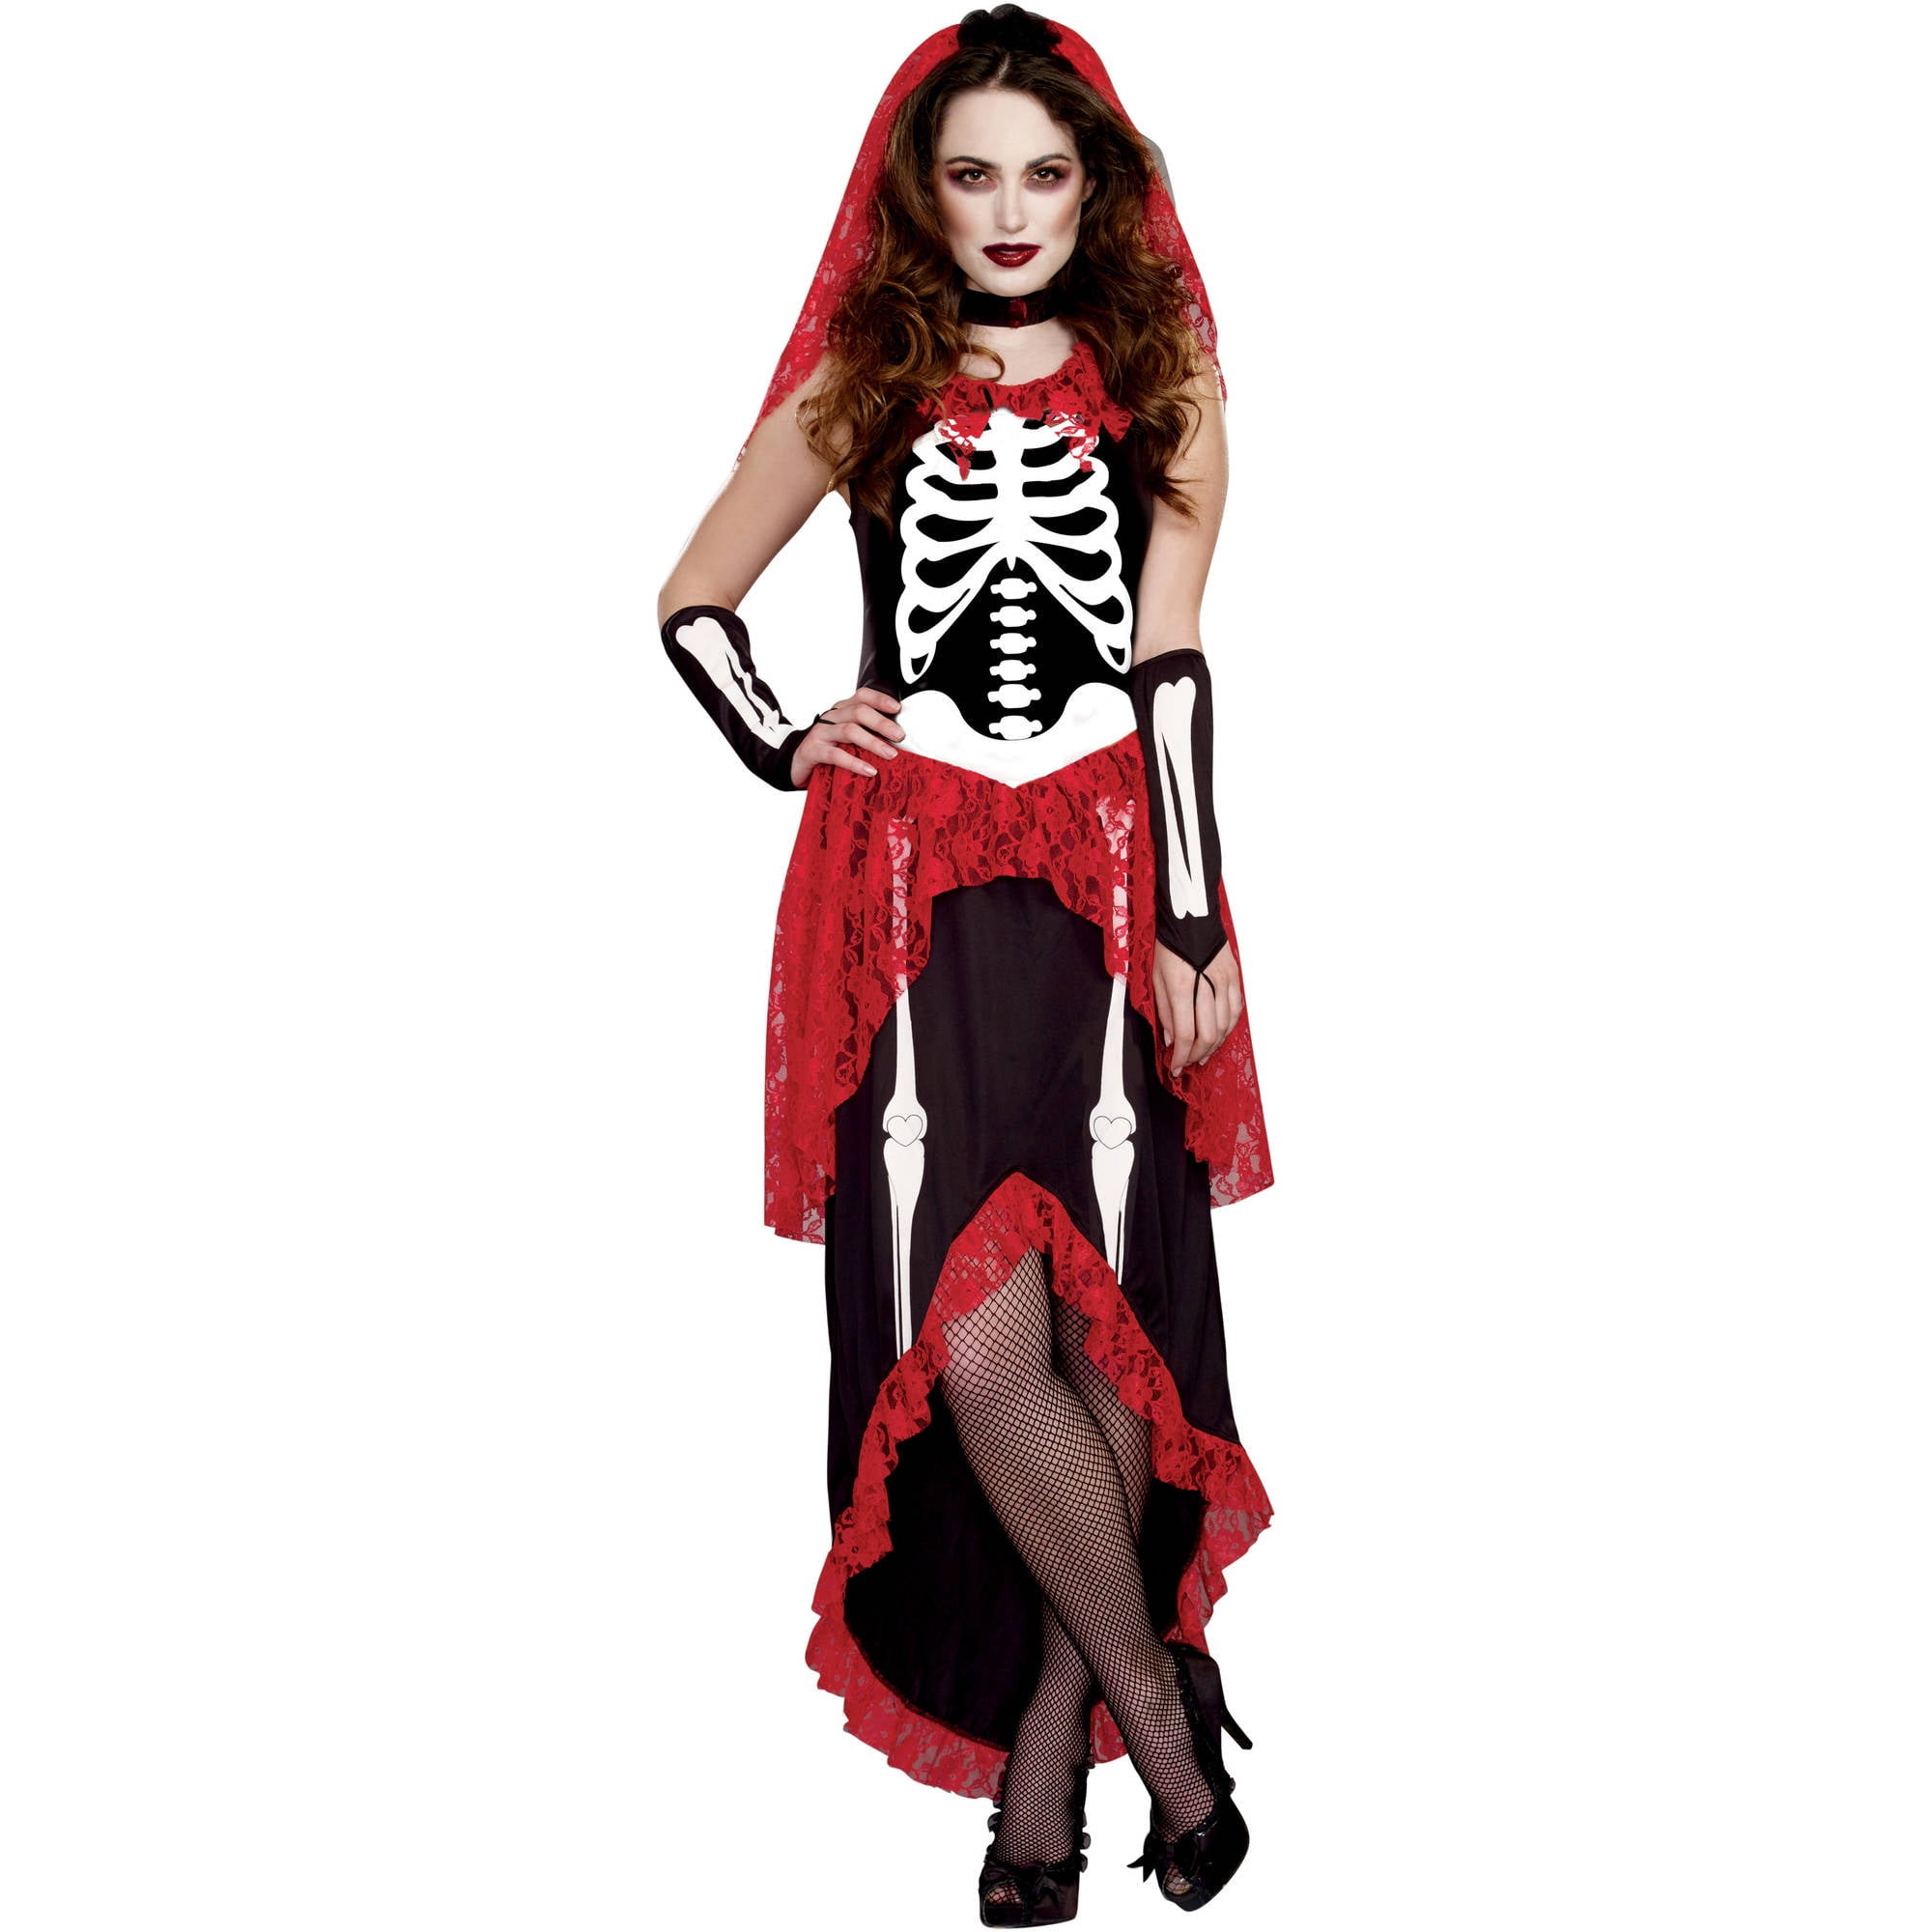 Bone-Ita Beauty Adult Women's Halloween Costume, Extra Large - Walmart.com